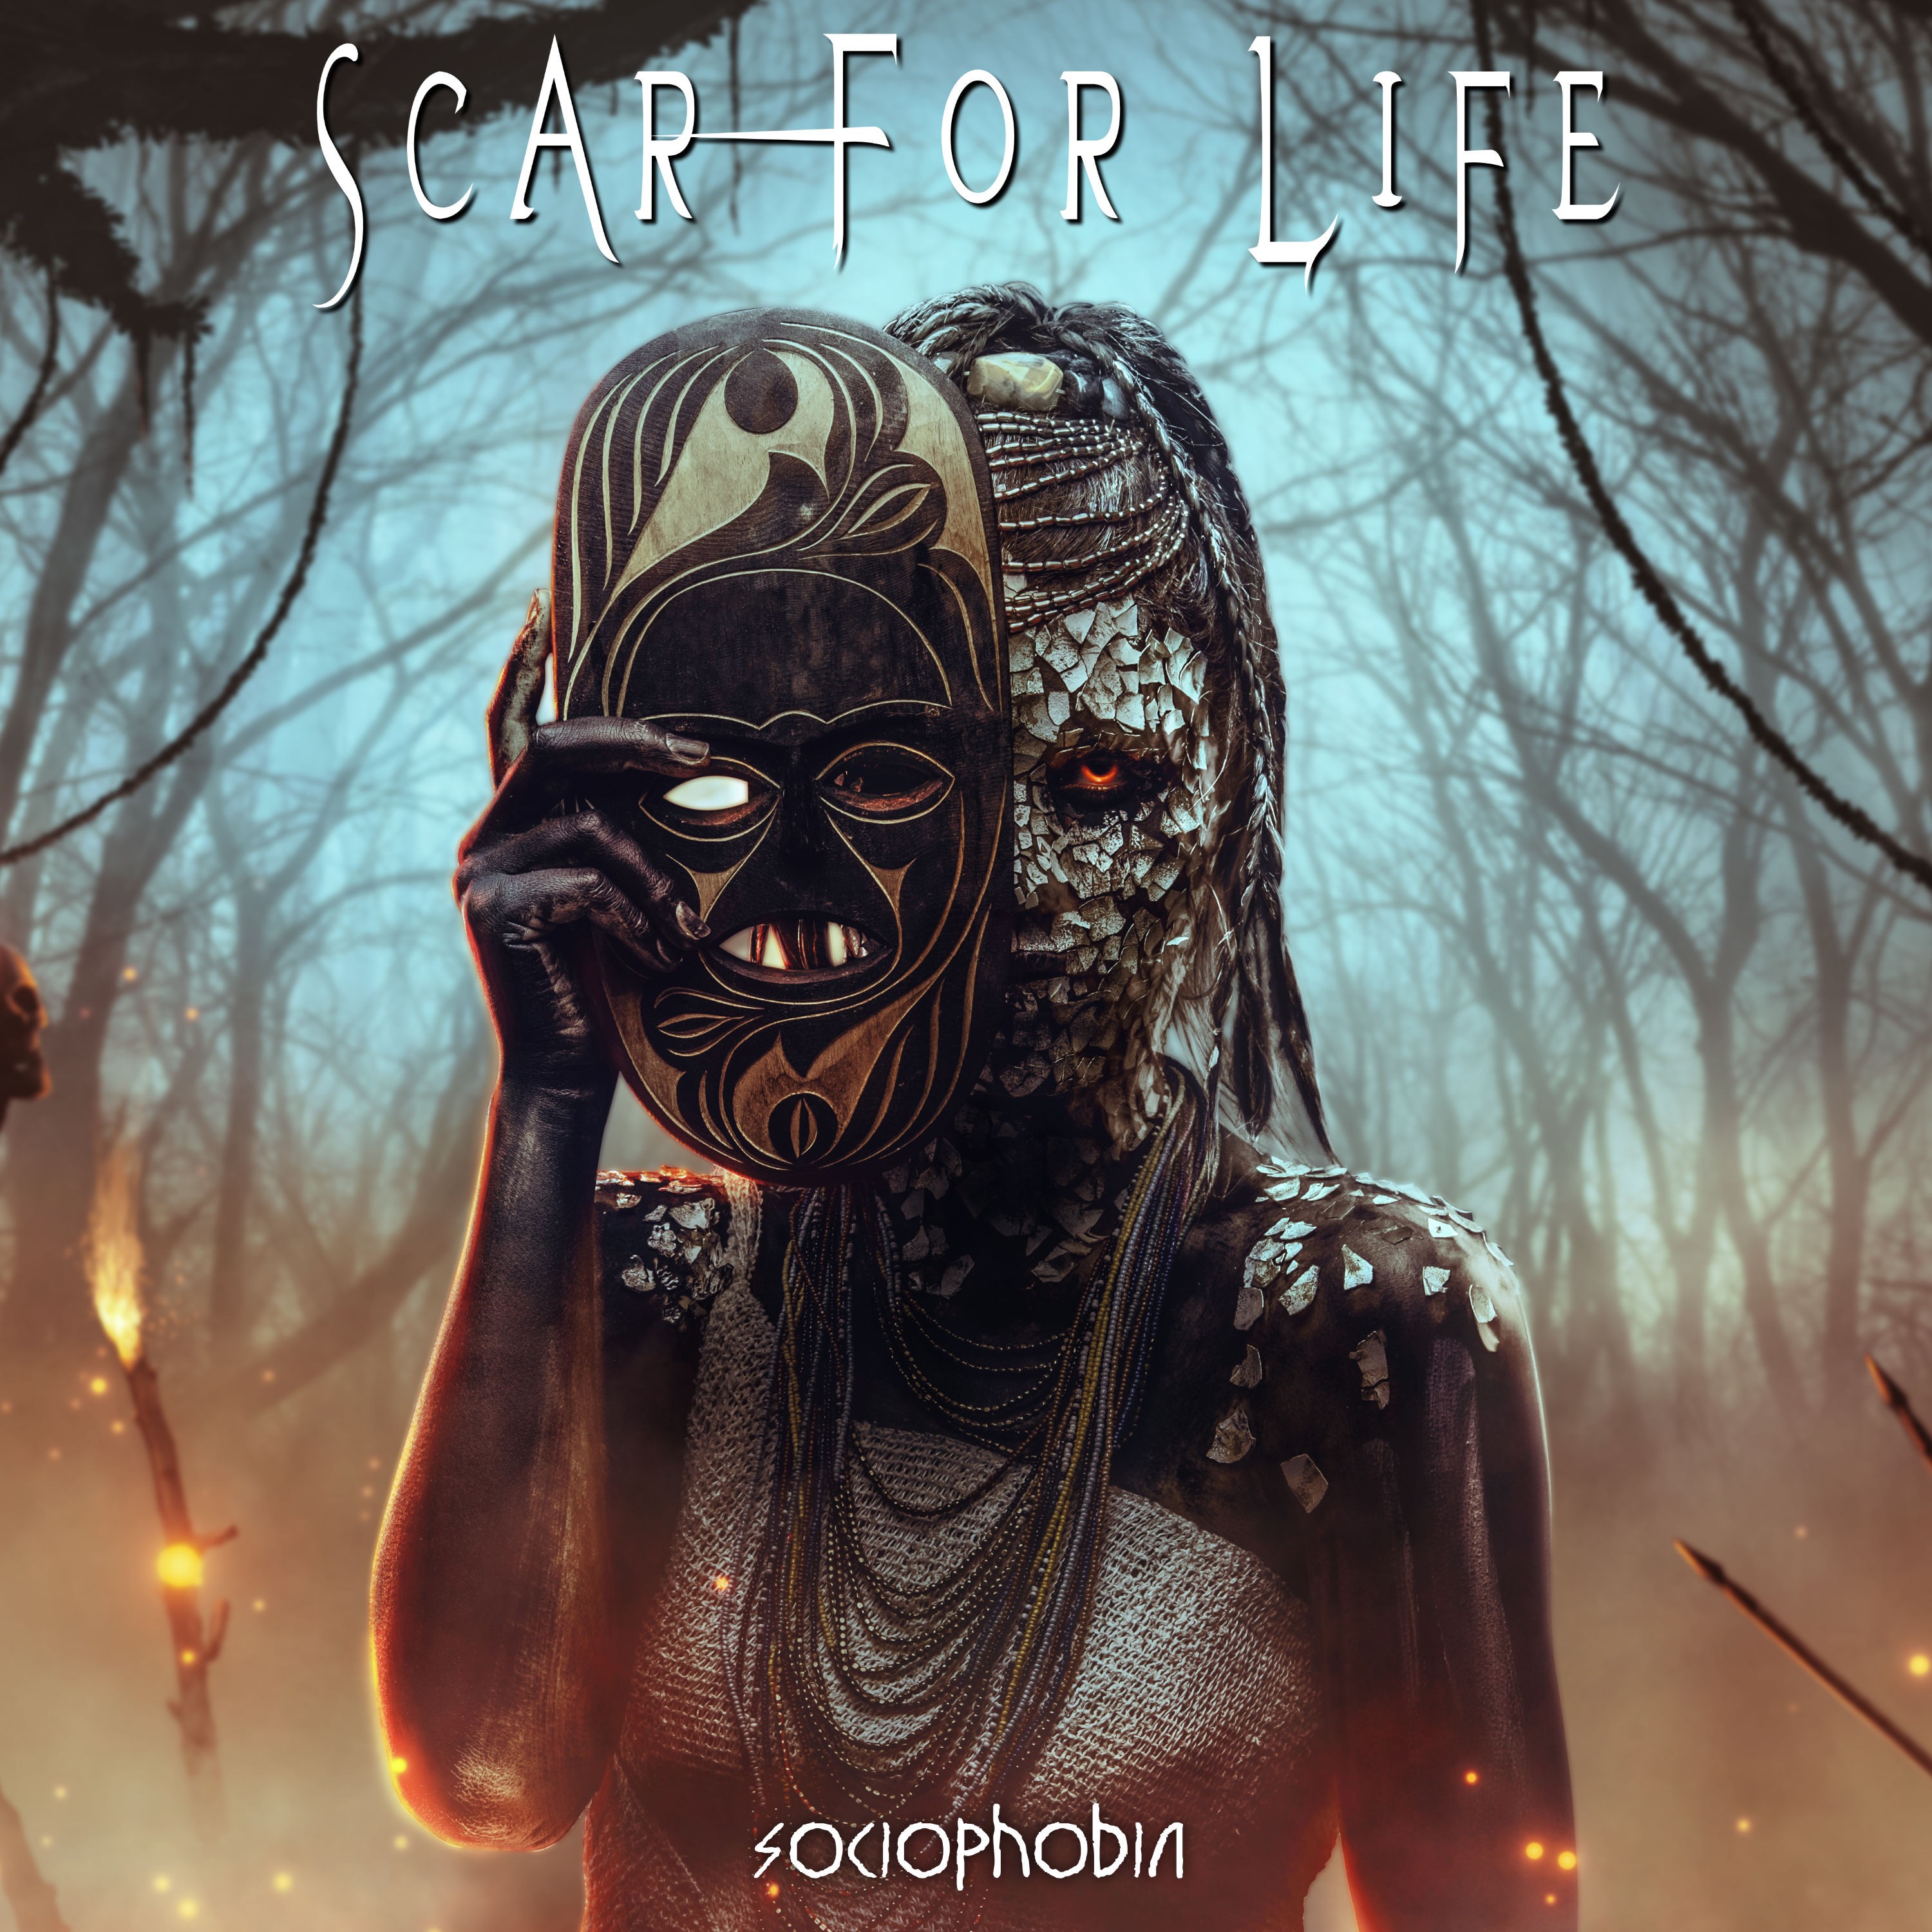 Scar For Life - Sociophobia (2022) 24bit FLAC Download